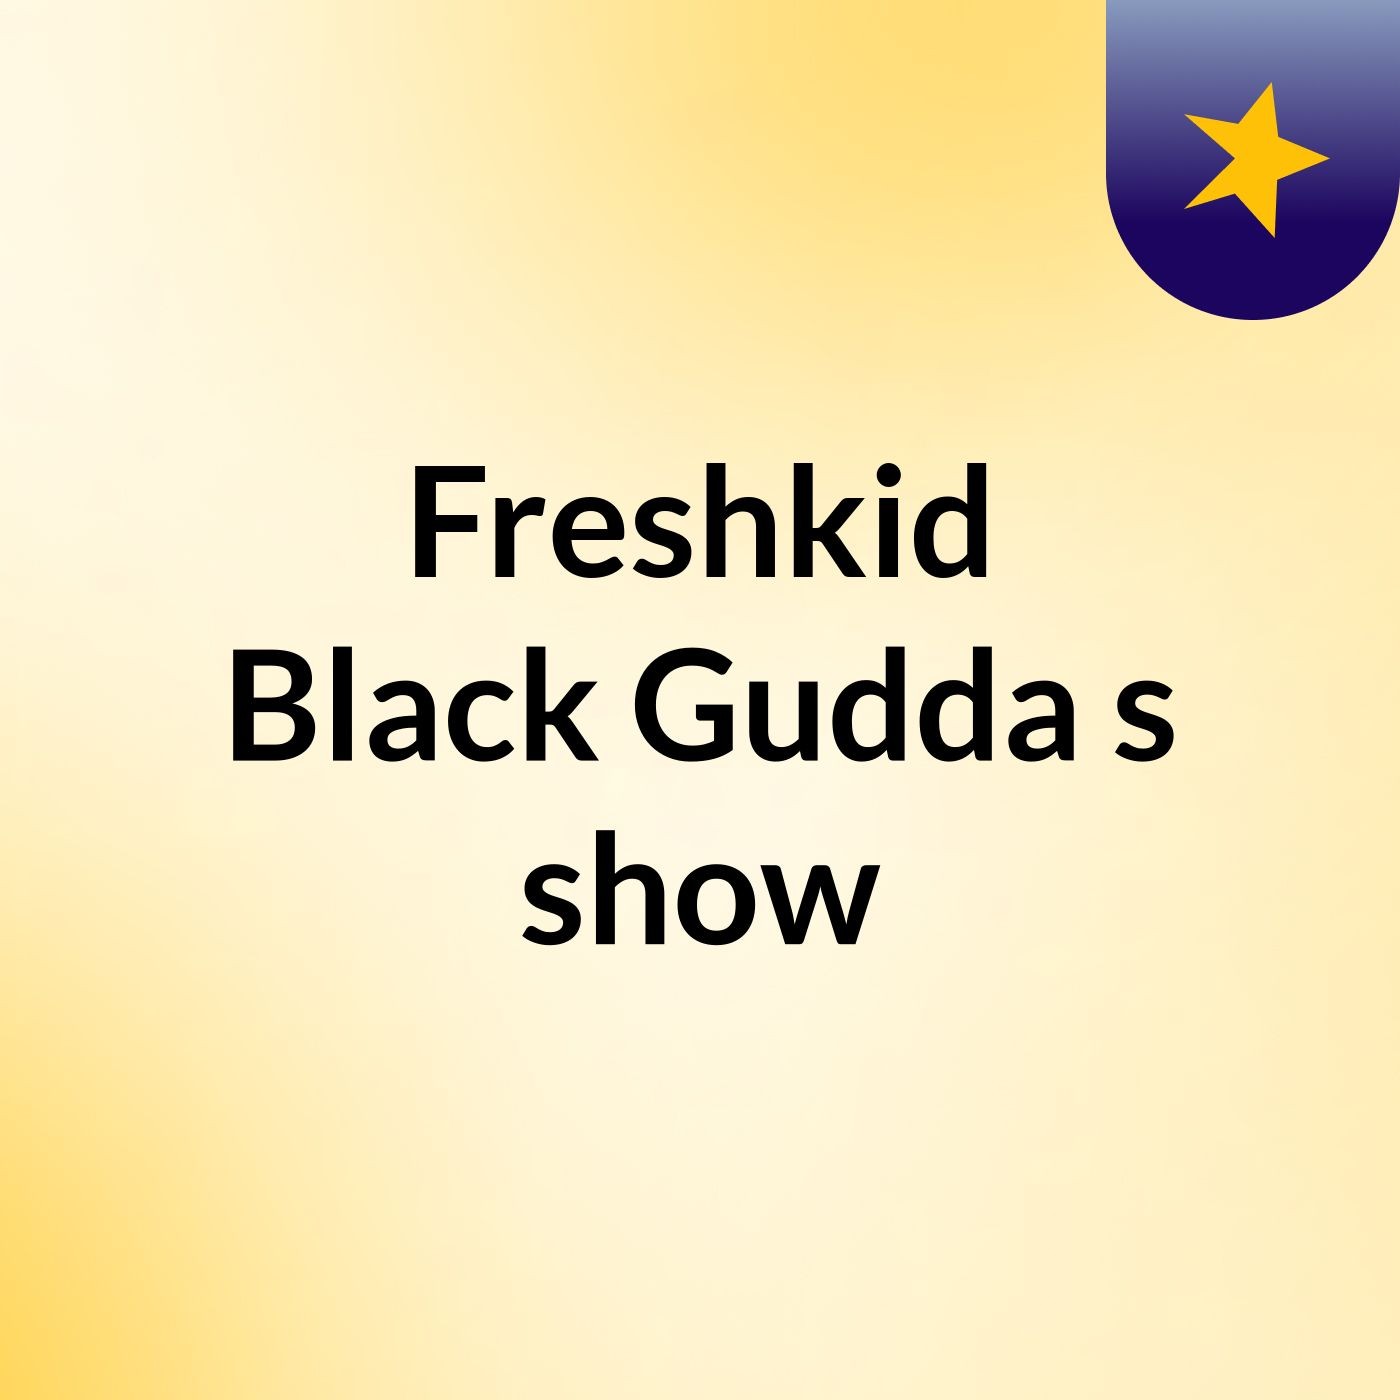 Episode 4 - Freshkid Black Gudda's show